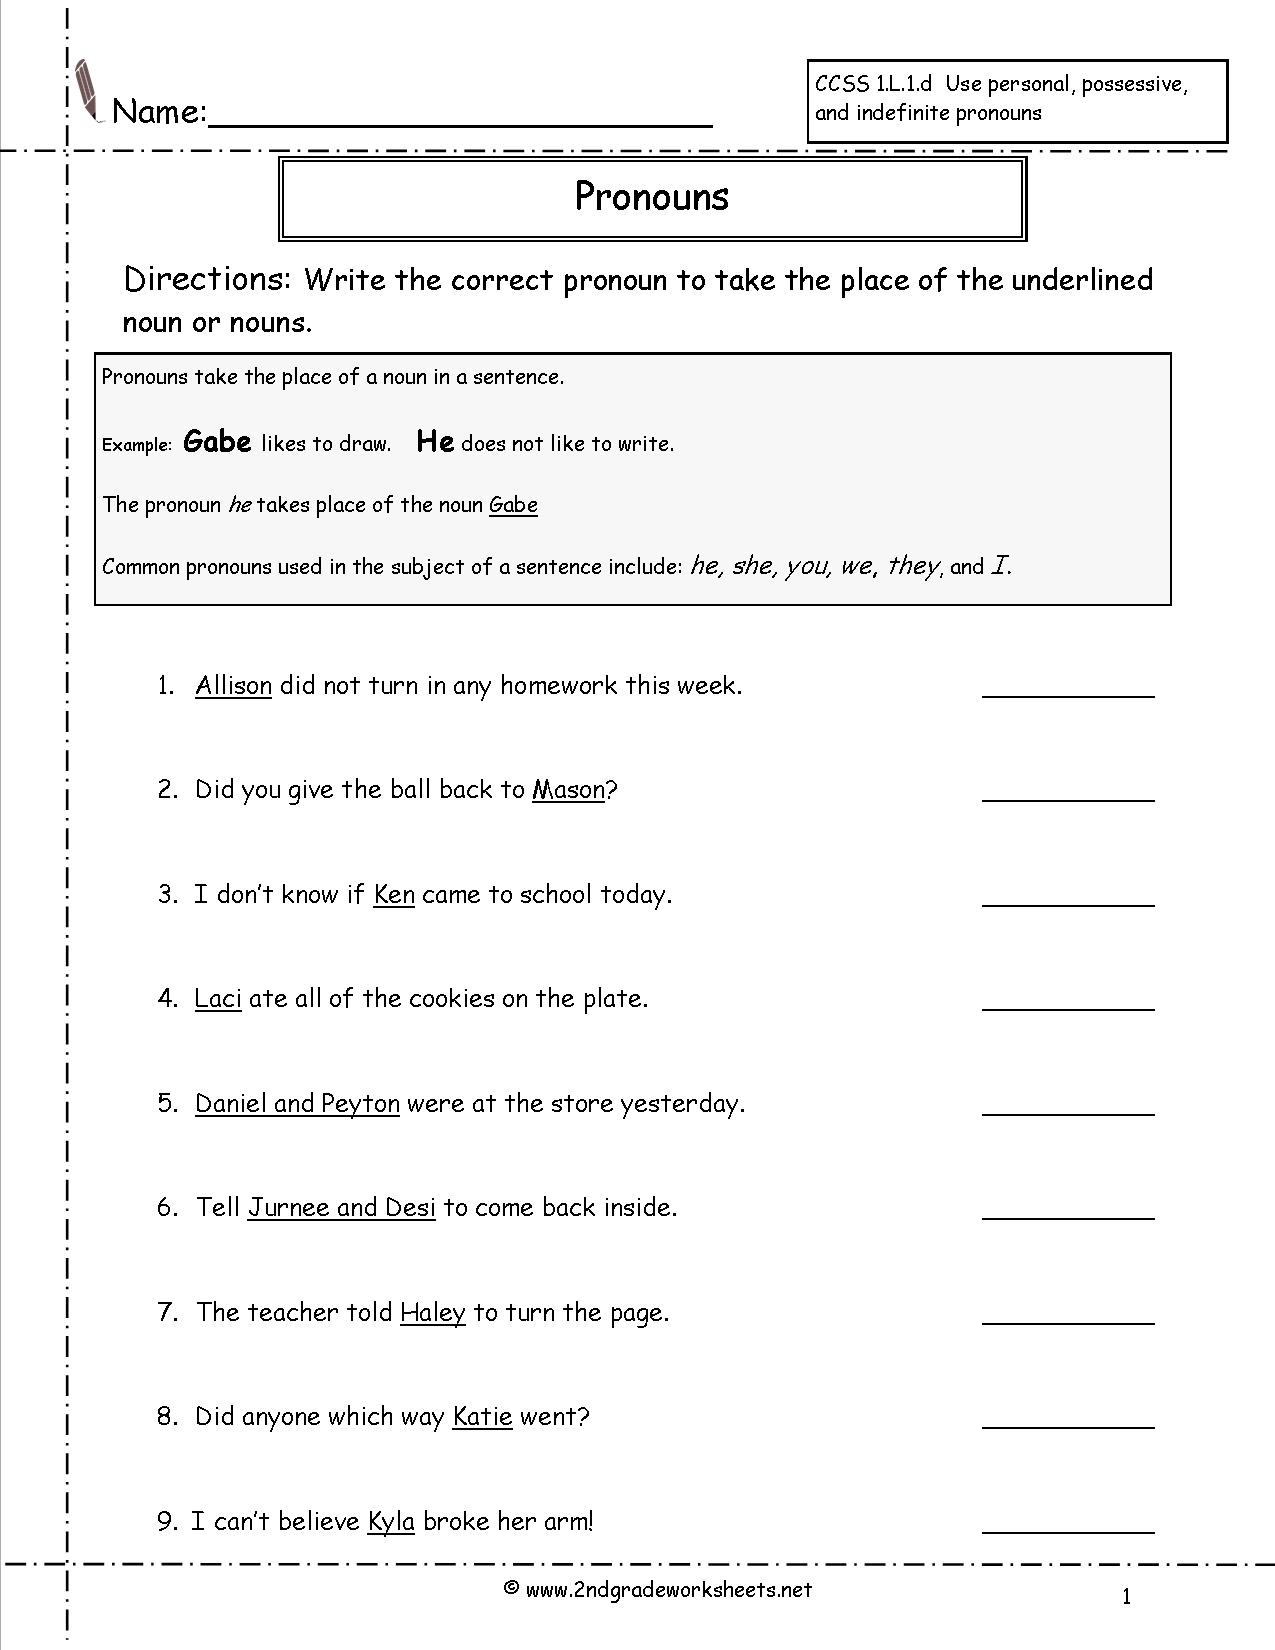 nouns-worksheets-and-printouts-free-printable-pronoun-worksheets-for-2nd-grade-free-printable